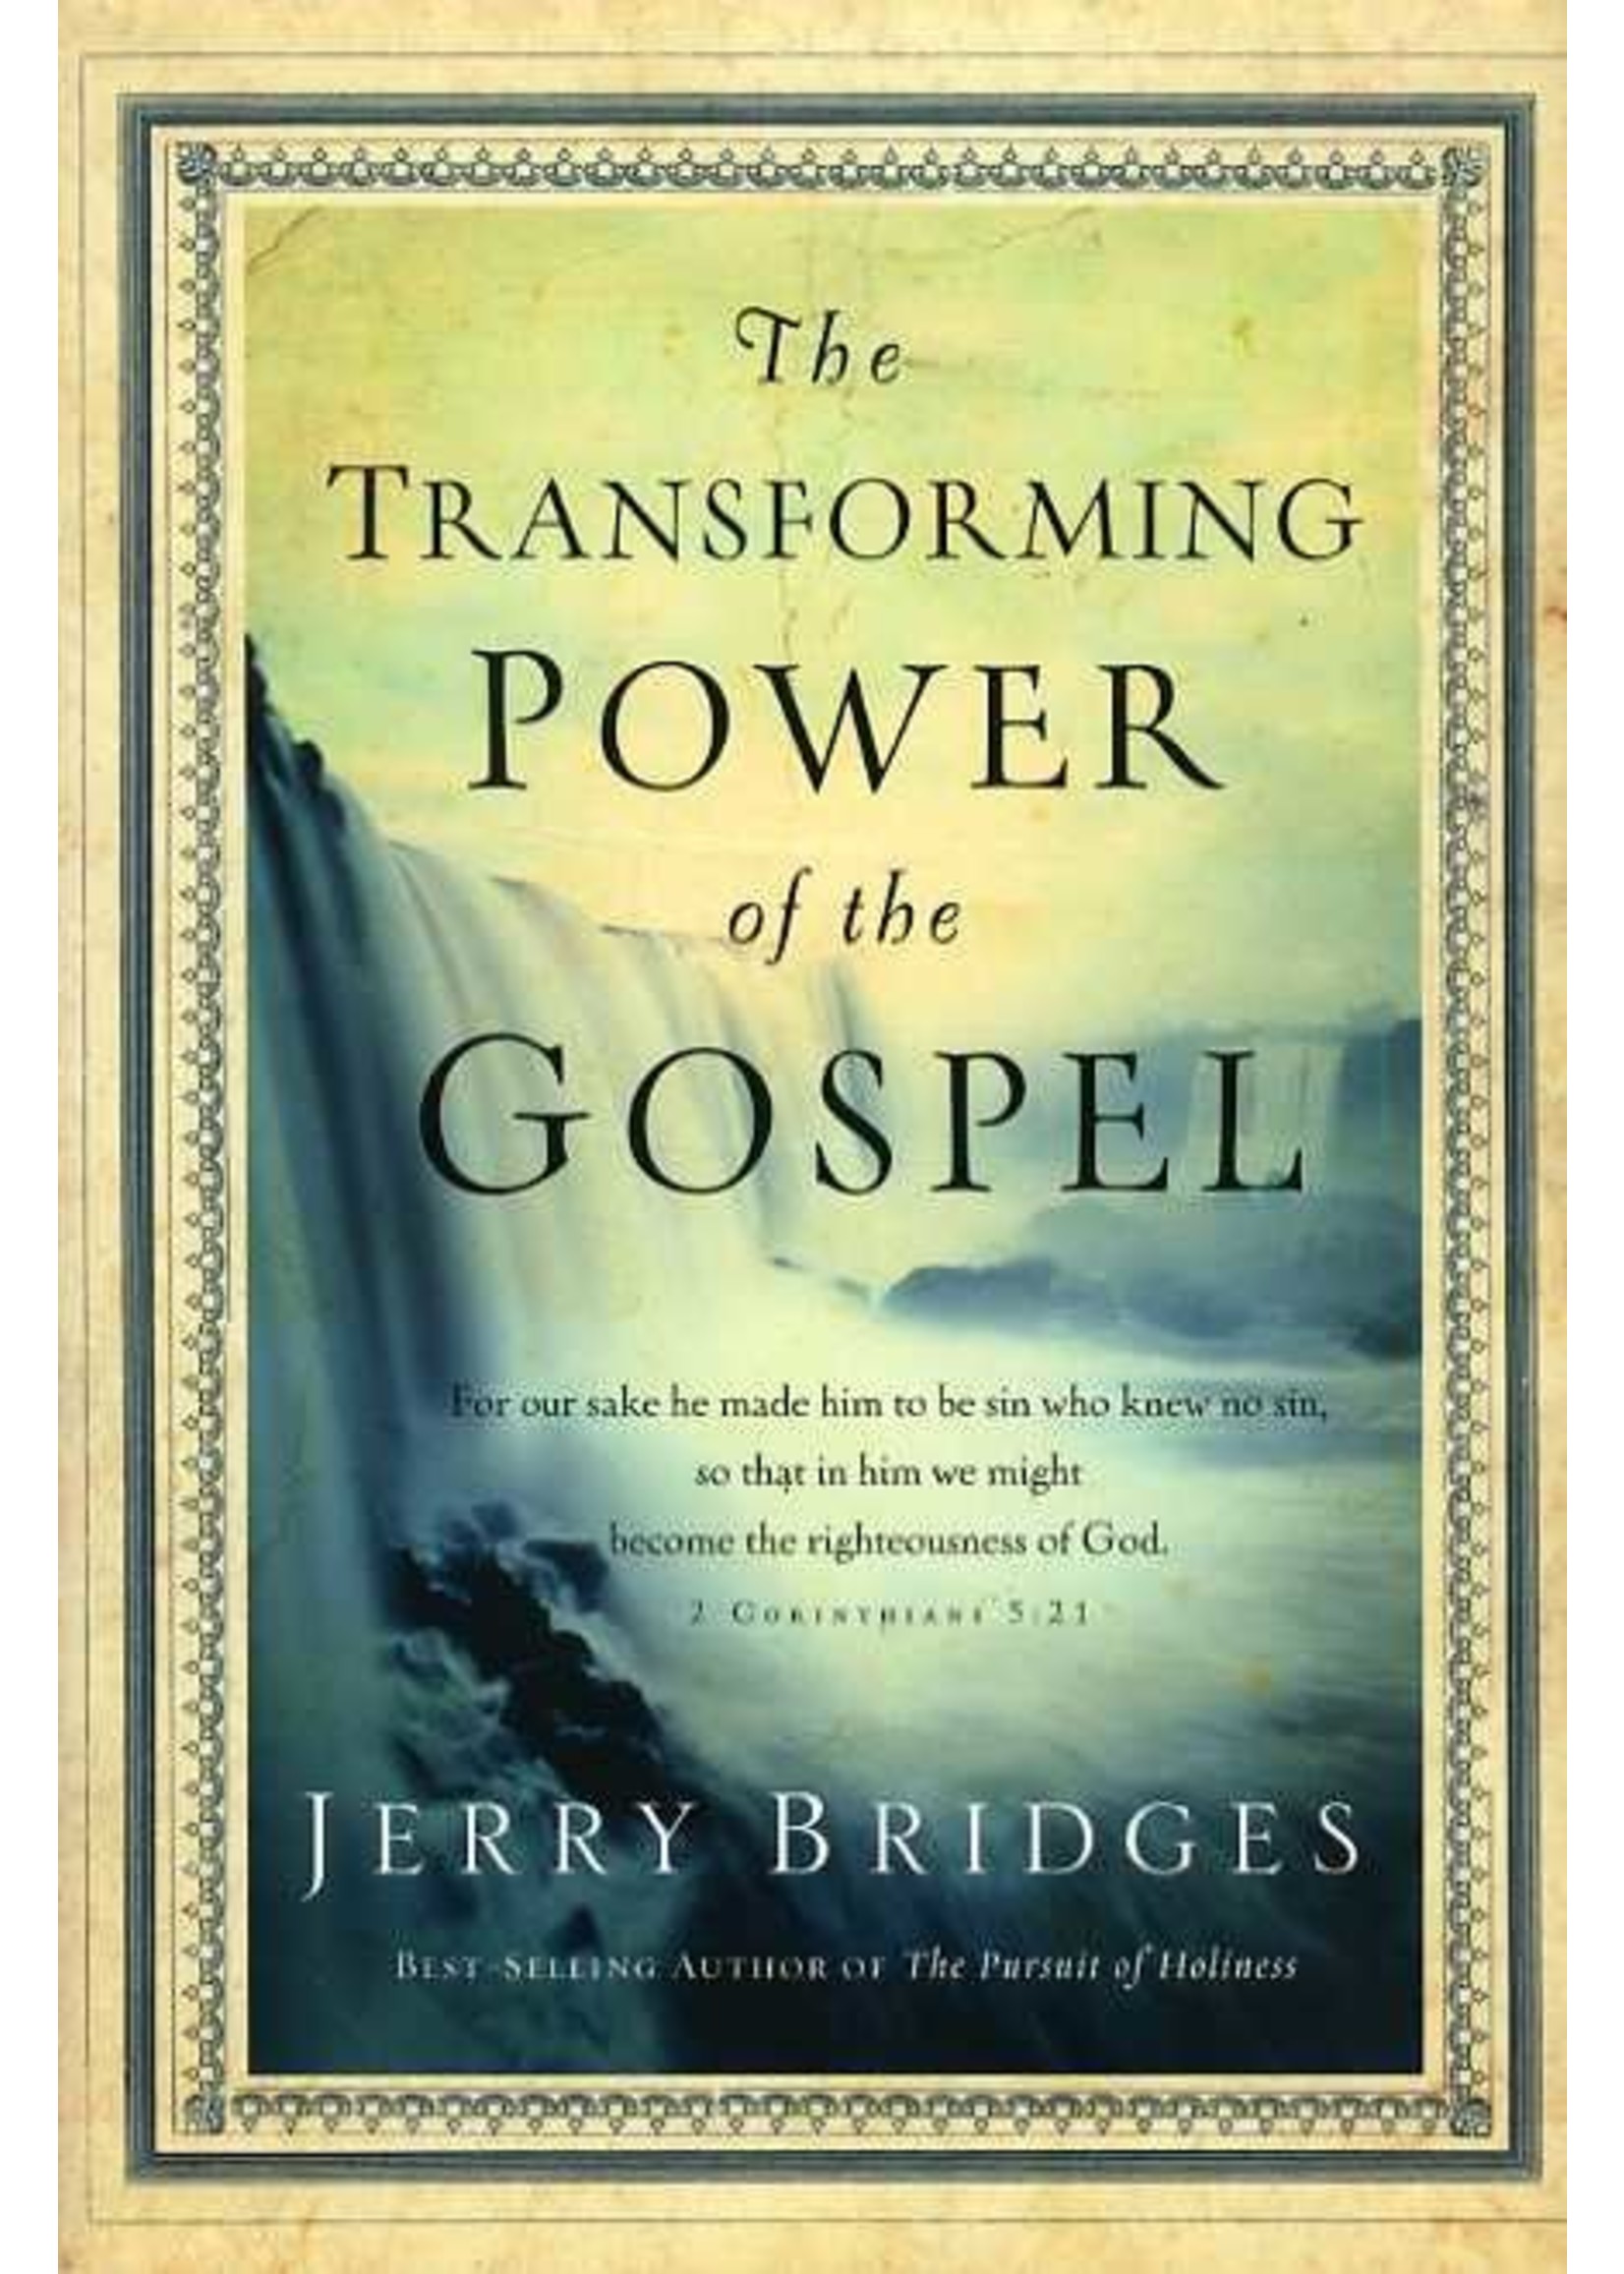 Tyndale Transforming Power of the Gospel - Jerry Bridges